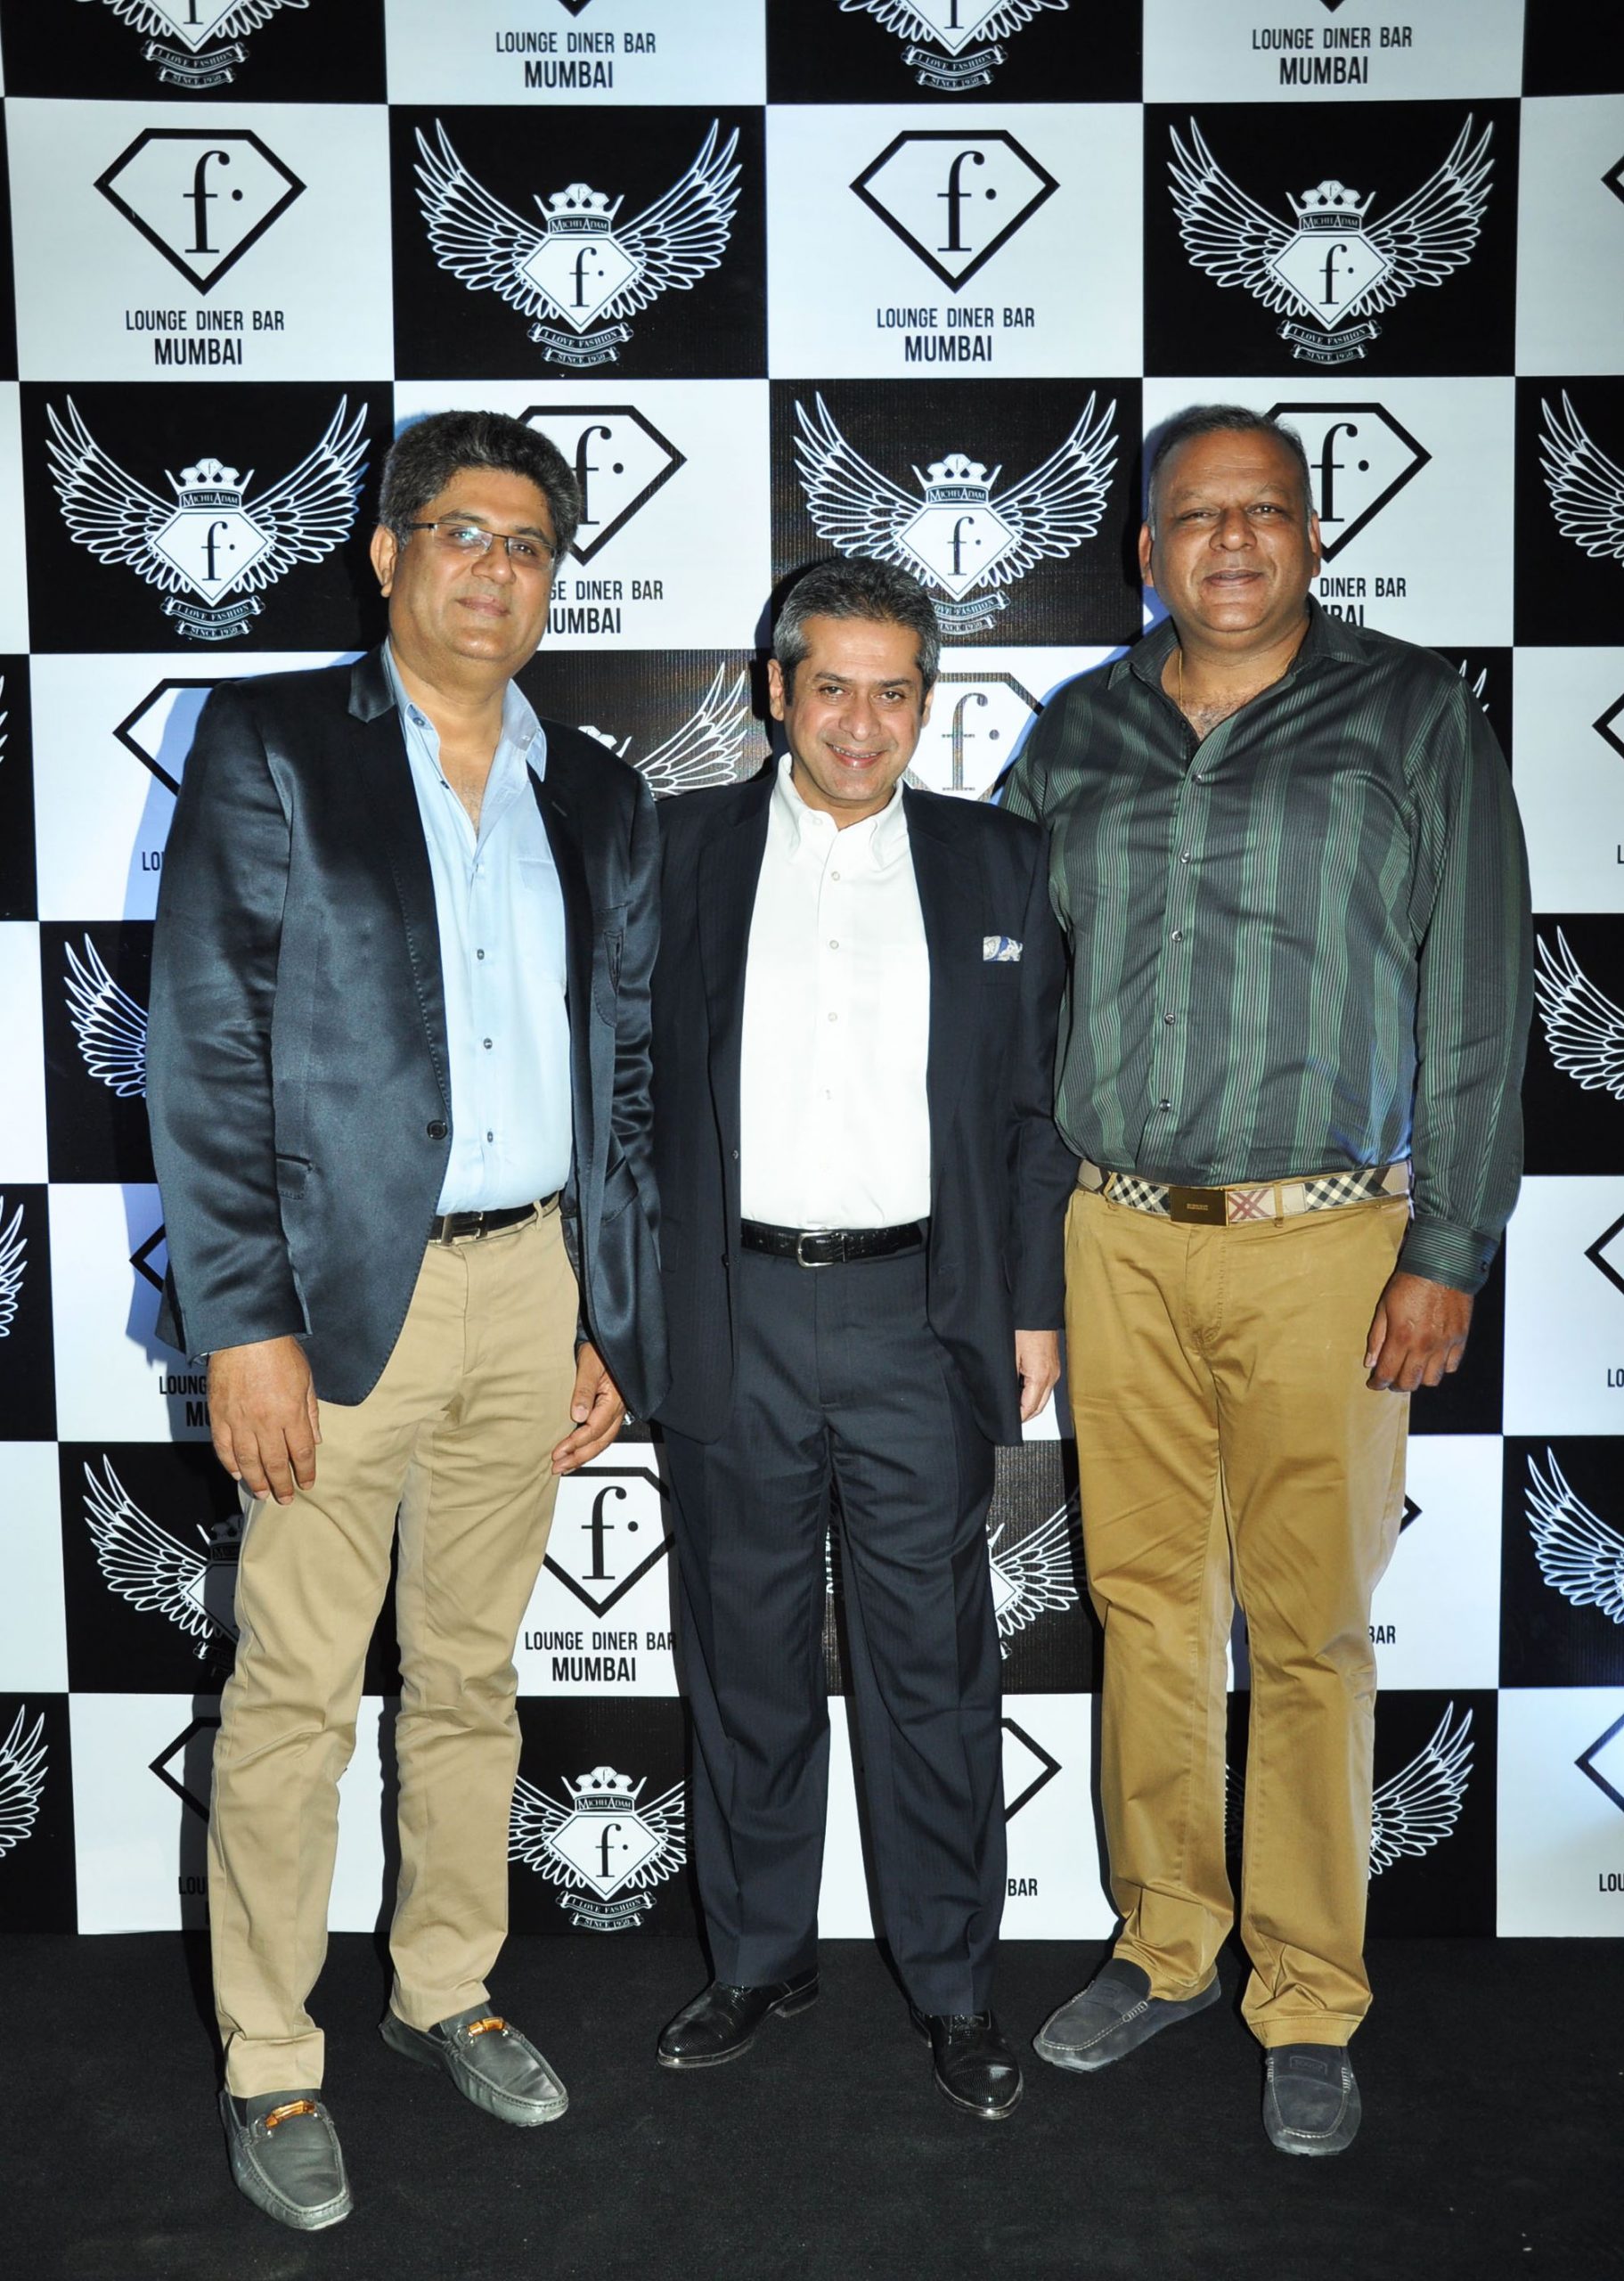 The Directors of F Lounge.Diner.Bar - Mr Yuvraj Chawla, Mr Rajan Madhu and Mr Puneet Nath